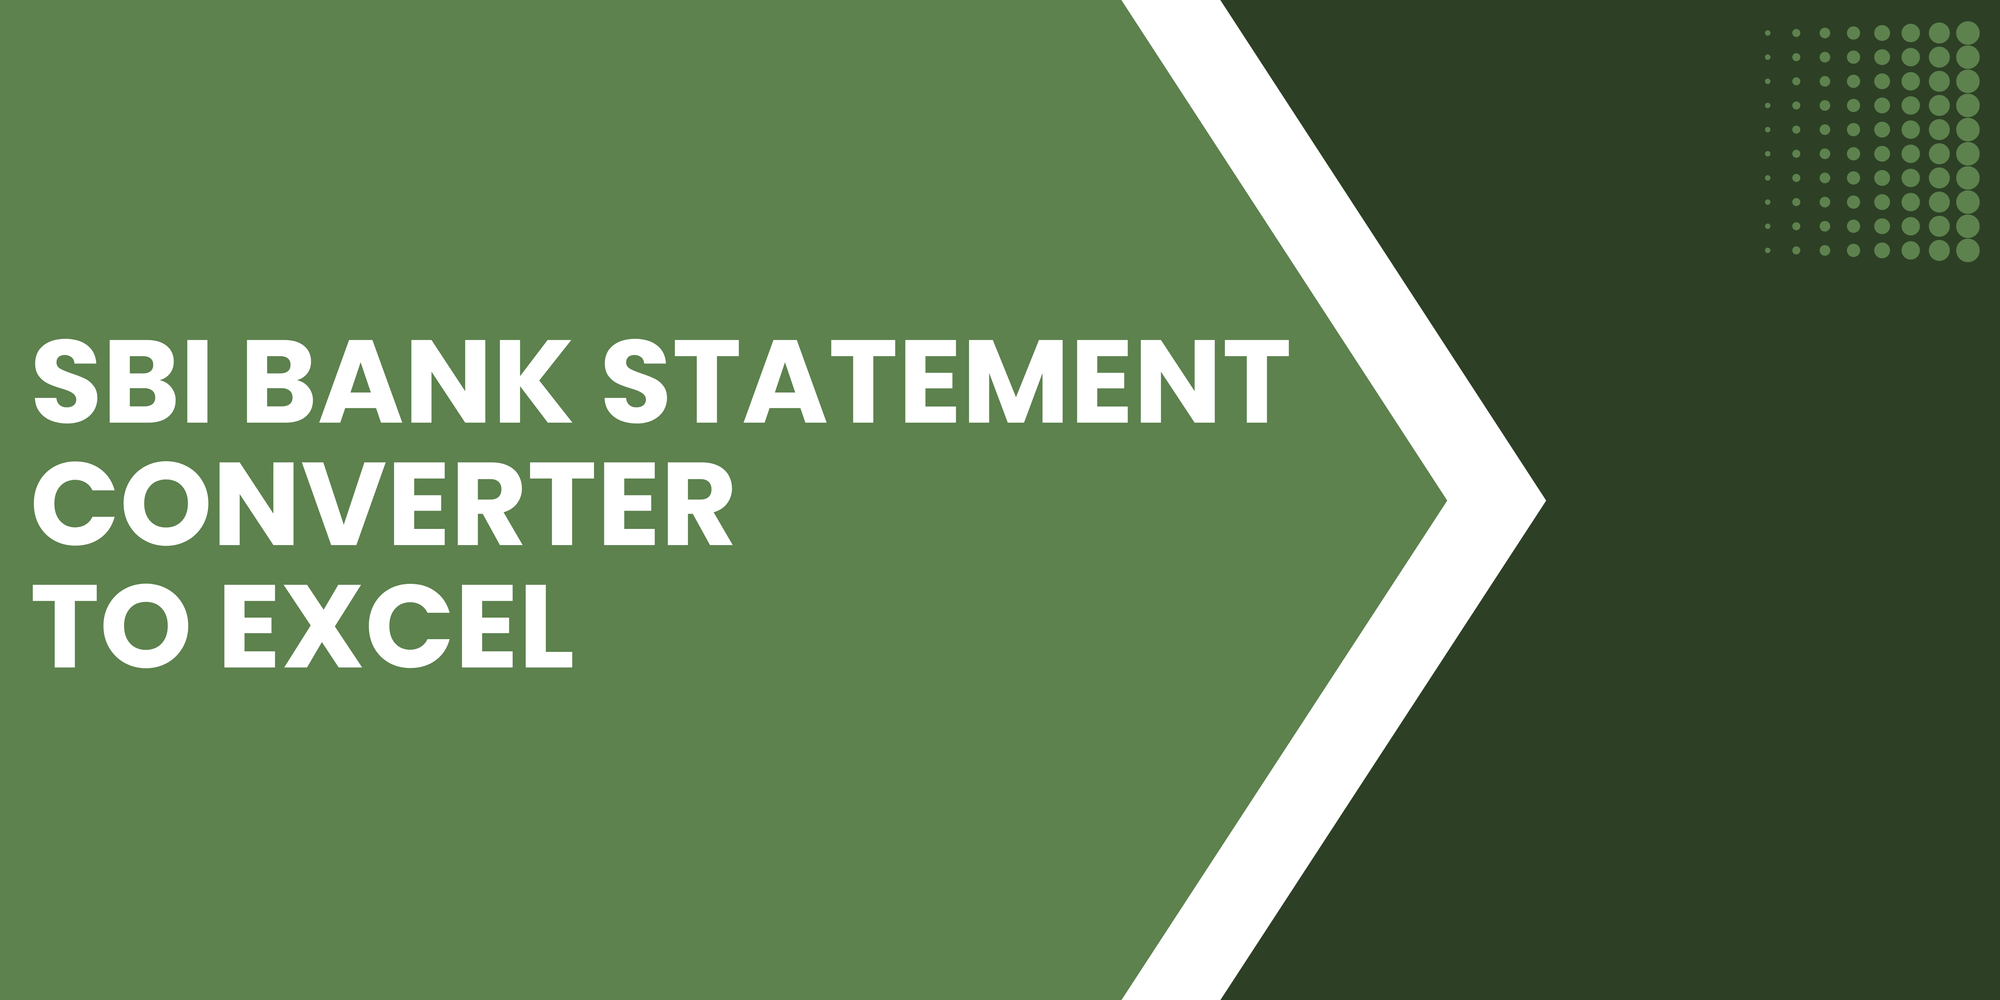 SBI Bank Statement Converter to Excel